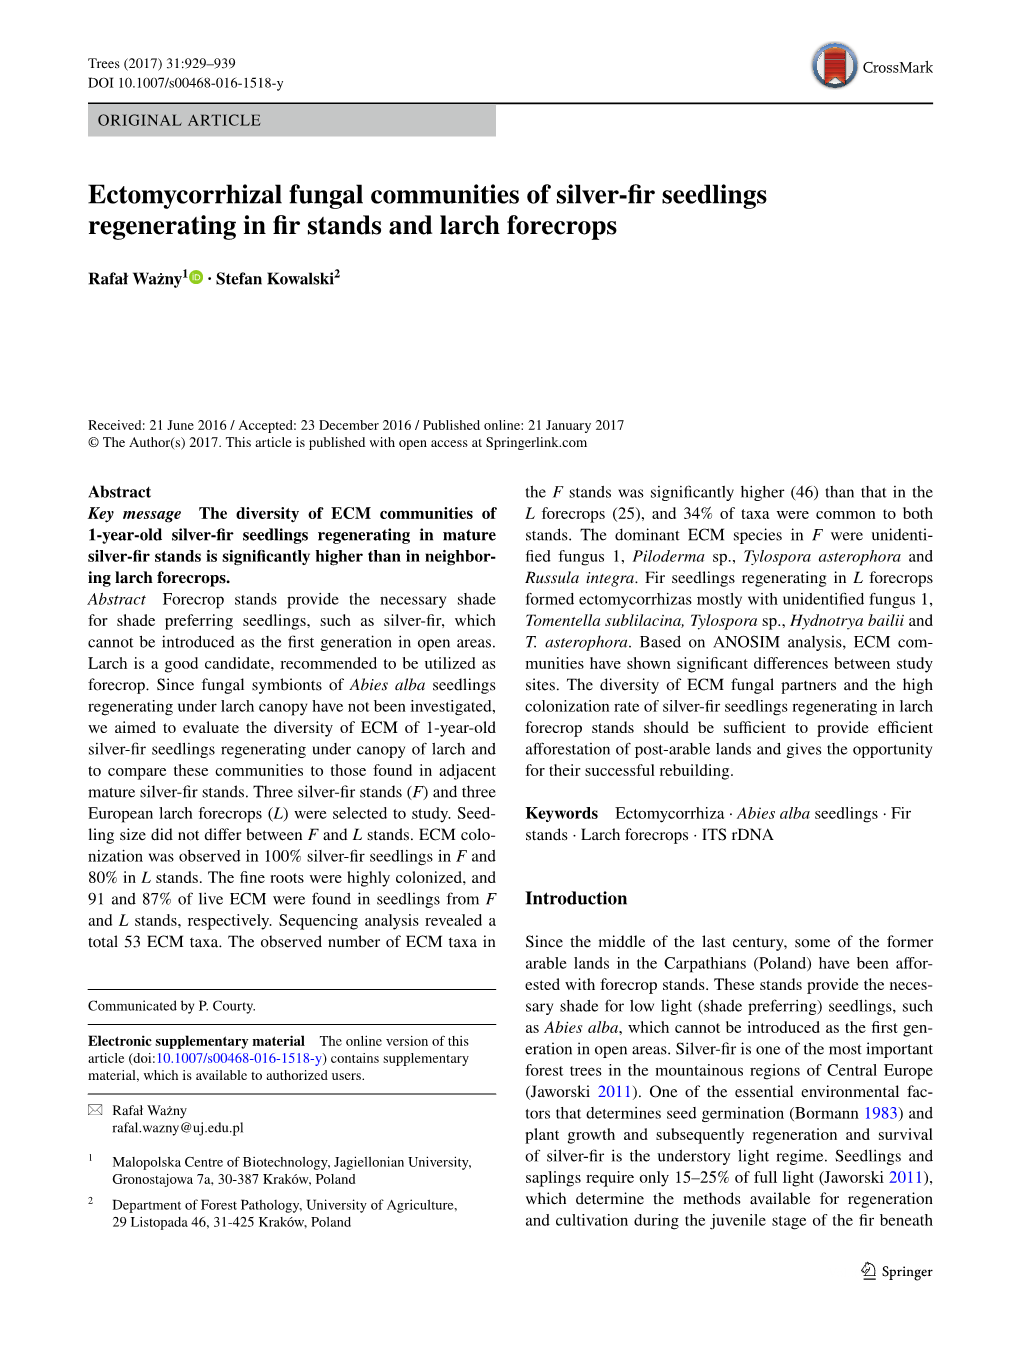 Ectomycorrhizal Fungal Communities of Silver-Fir Seedlings Regenerating In